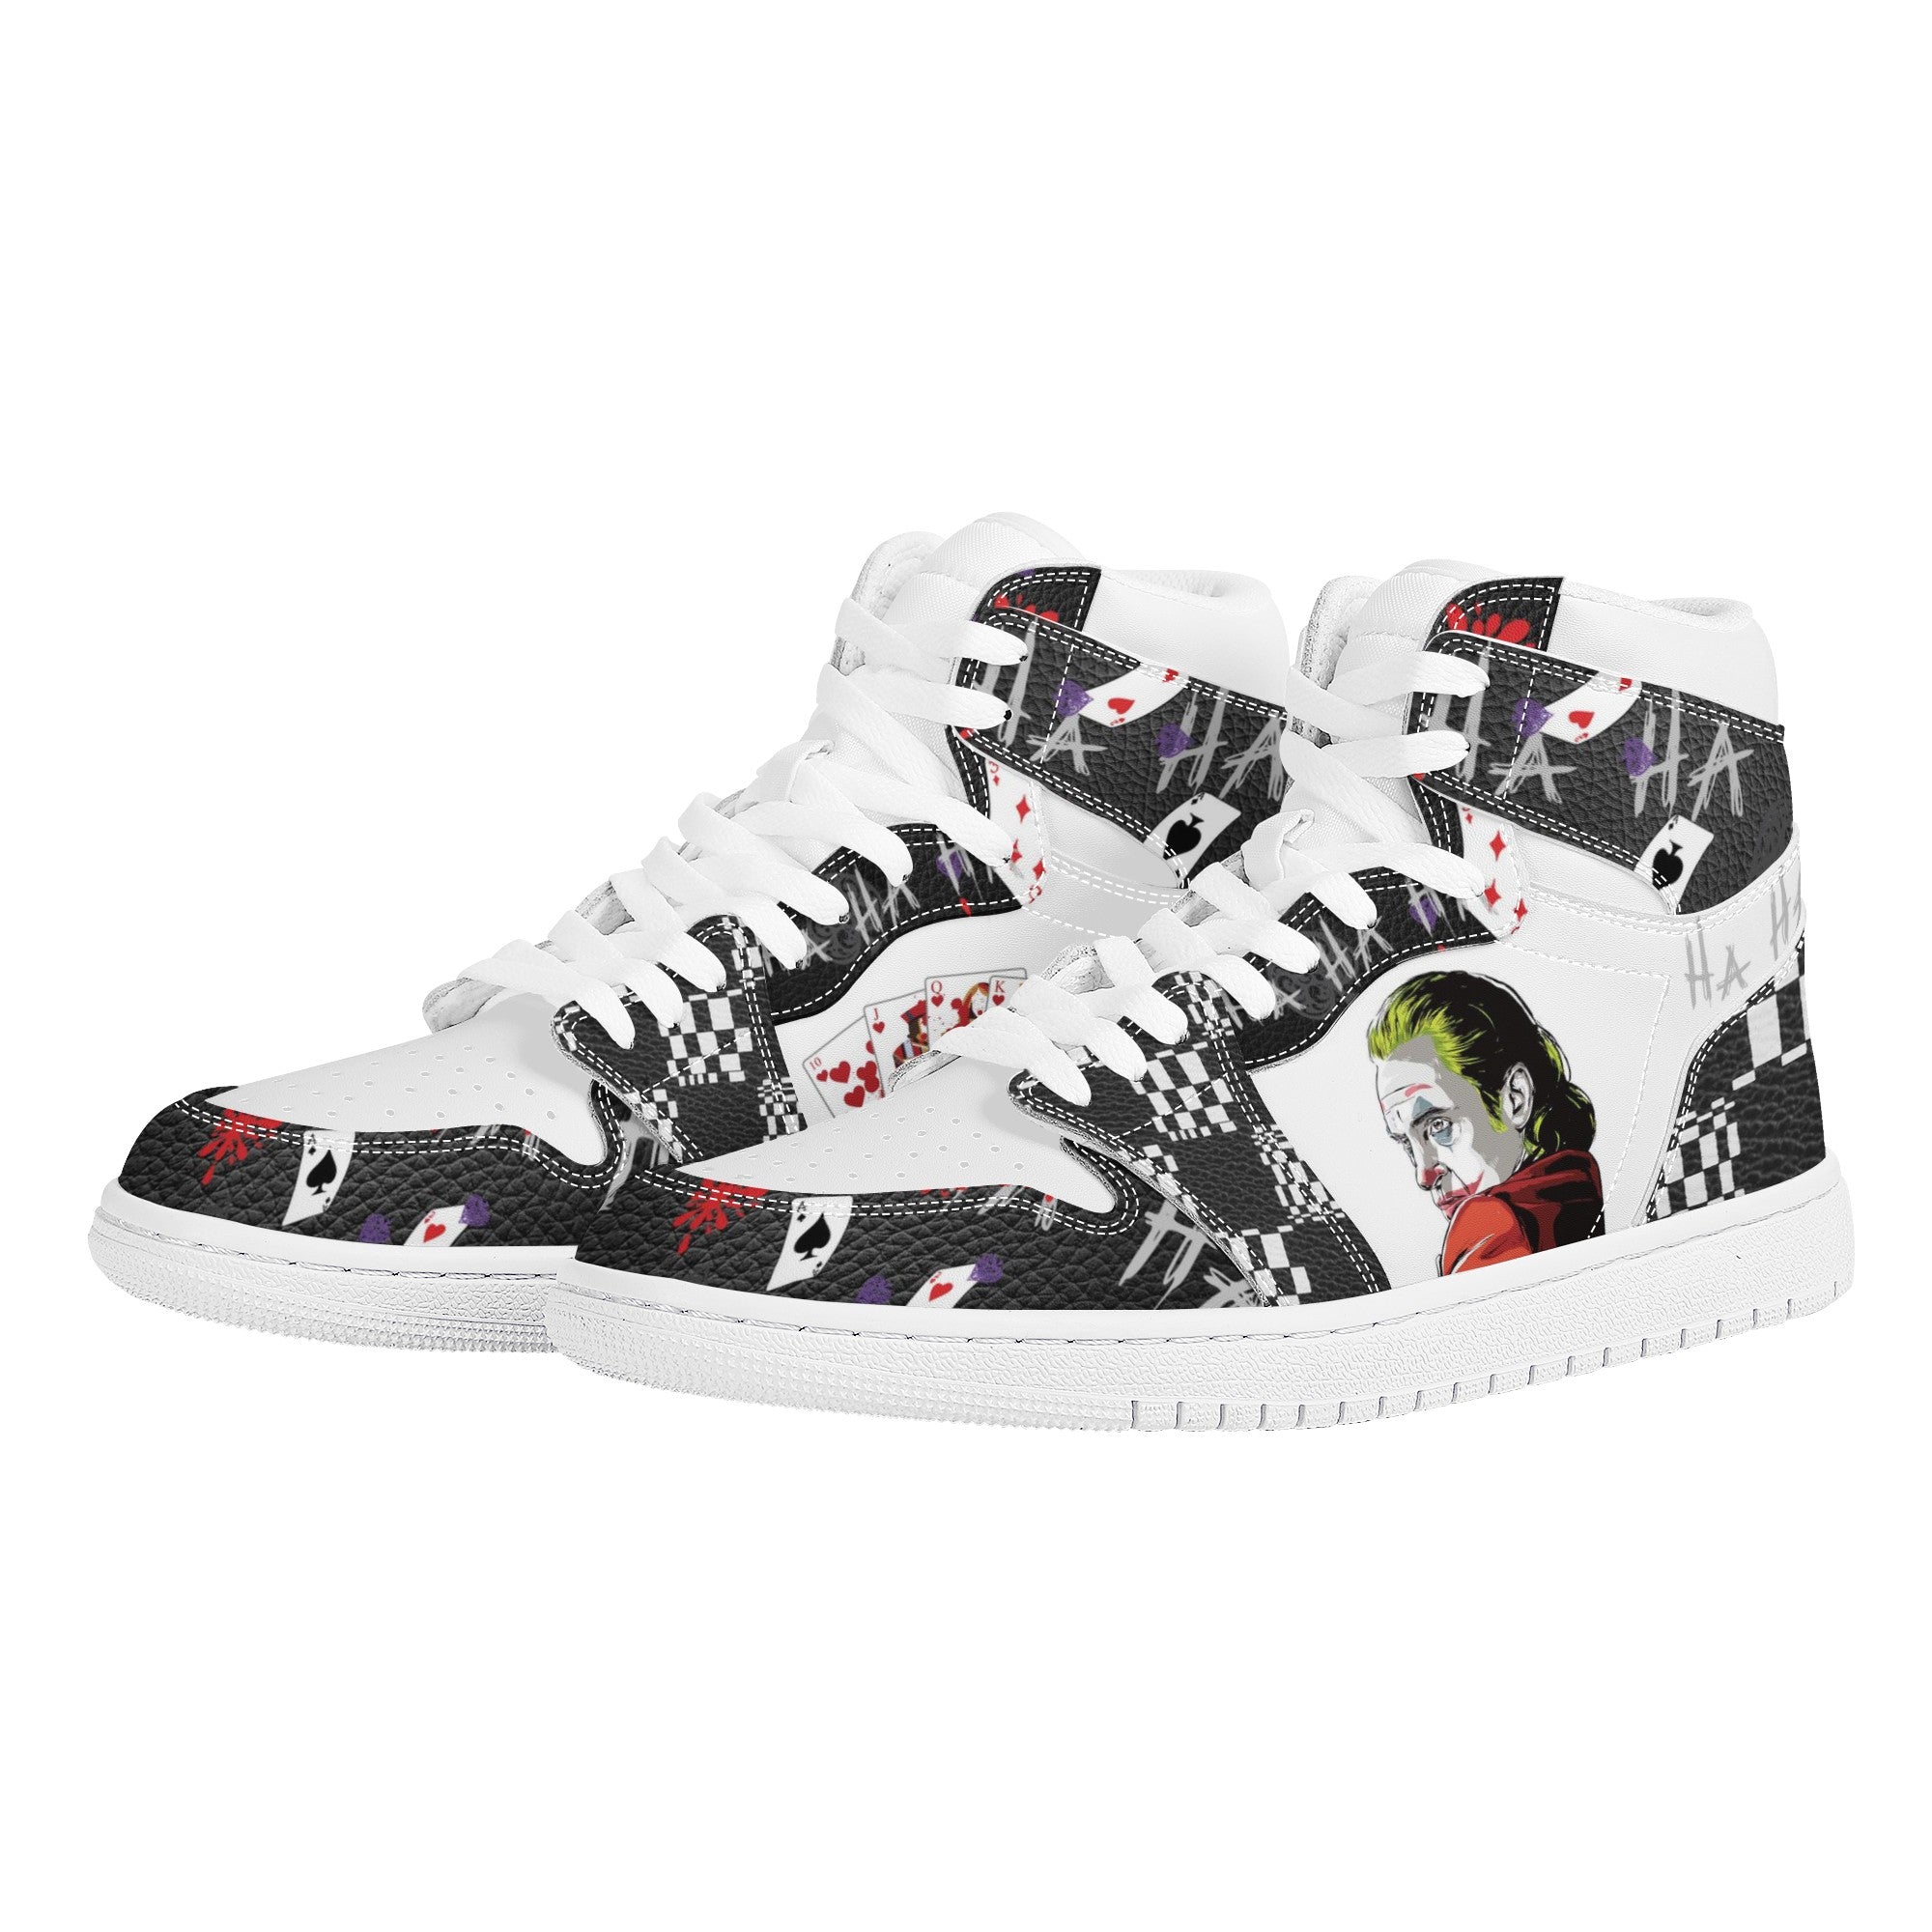 Joker Custom Nike Air Jordan 1 Leather Sneaker